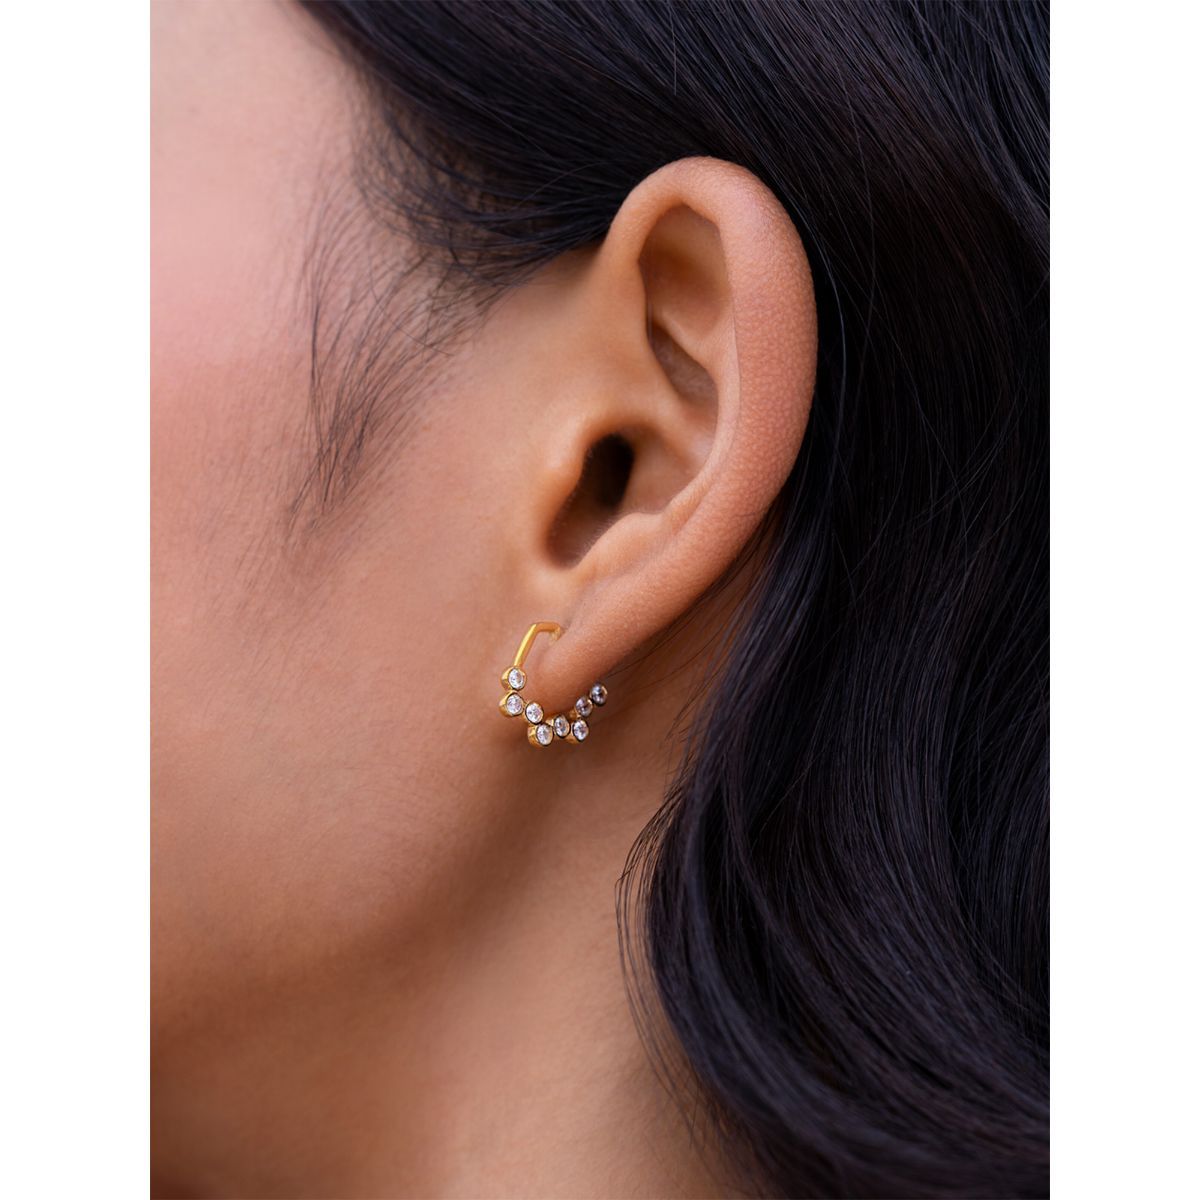 Essential Gold Hoop Earrings Jewellery India Online  CaratLanecom